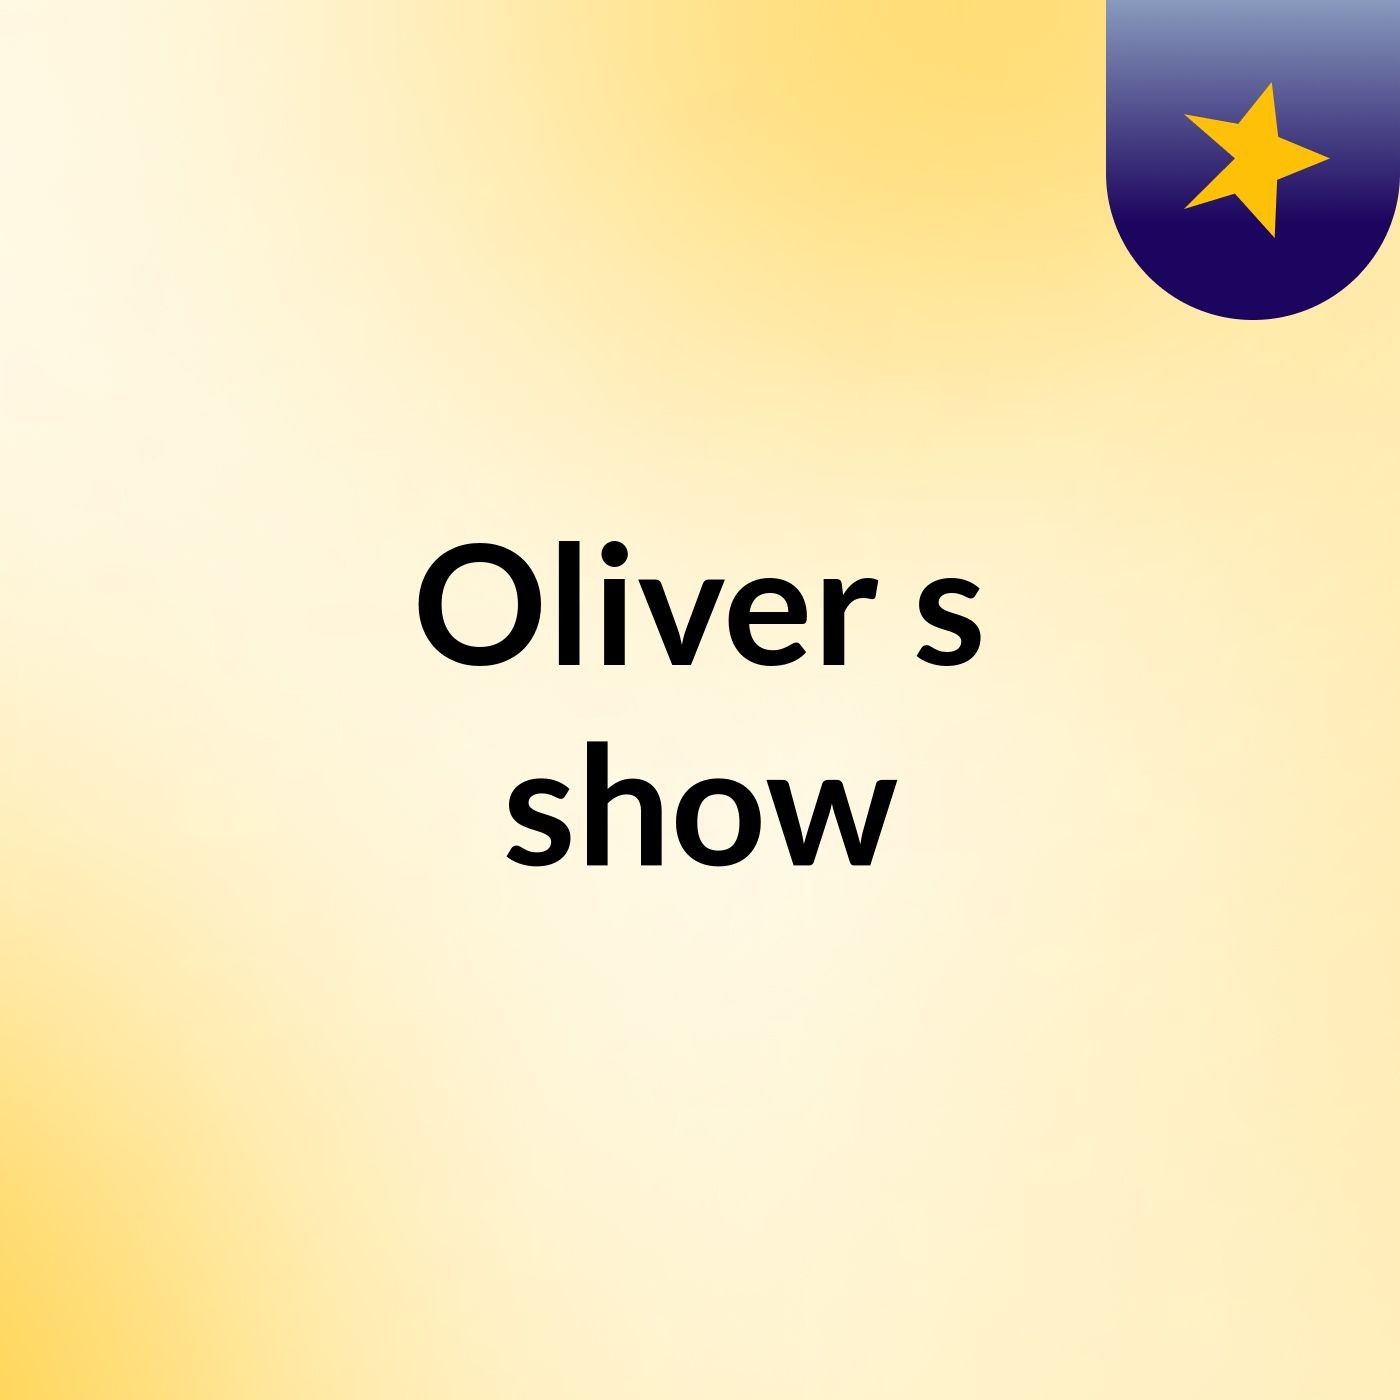 Oliver's show